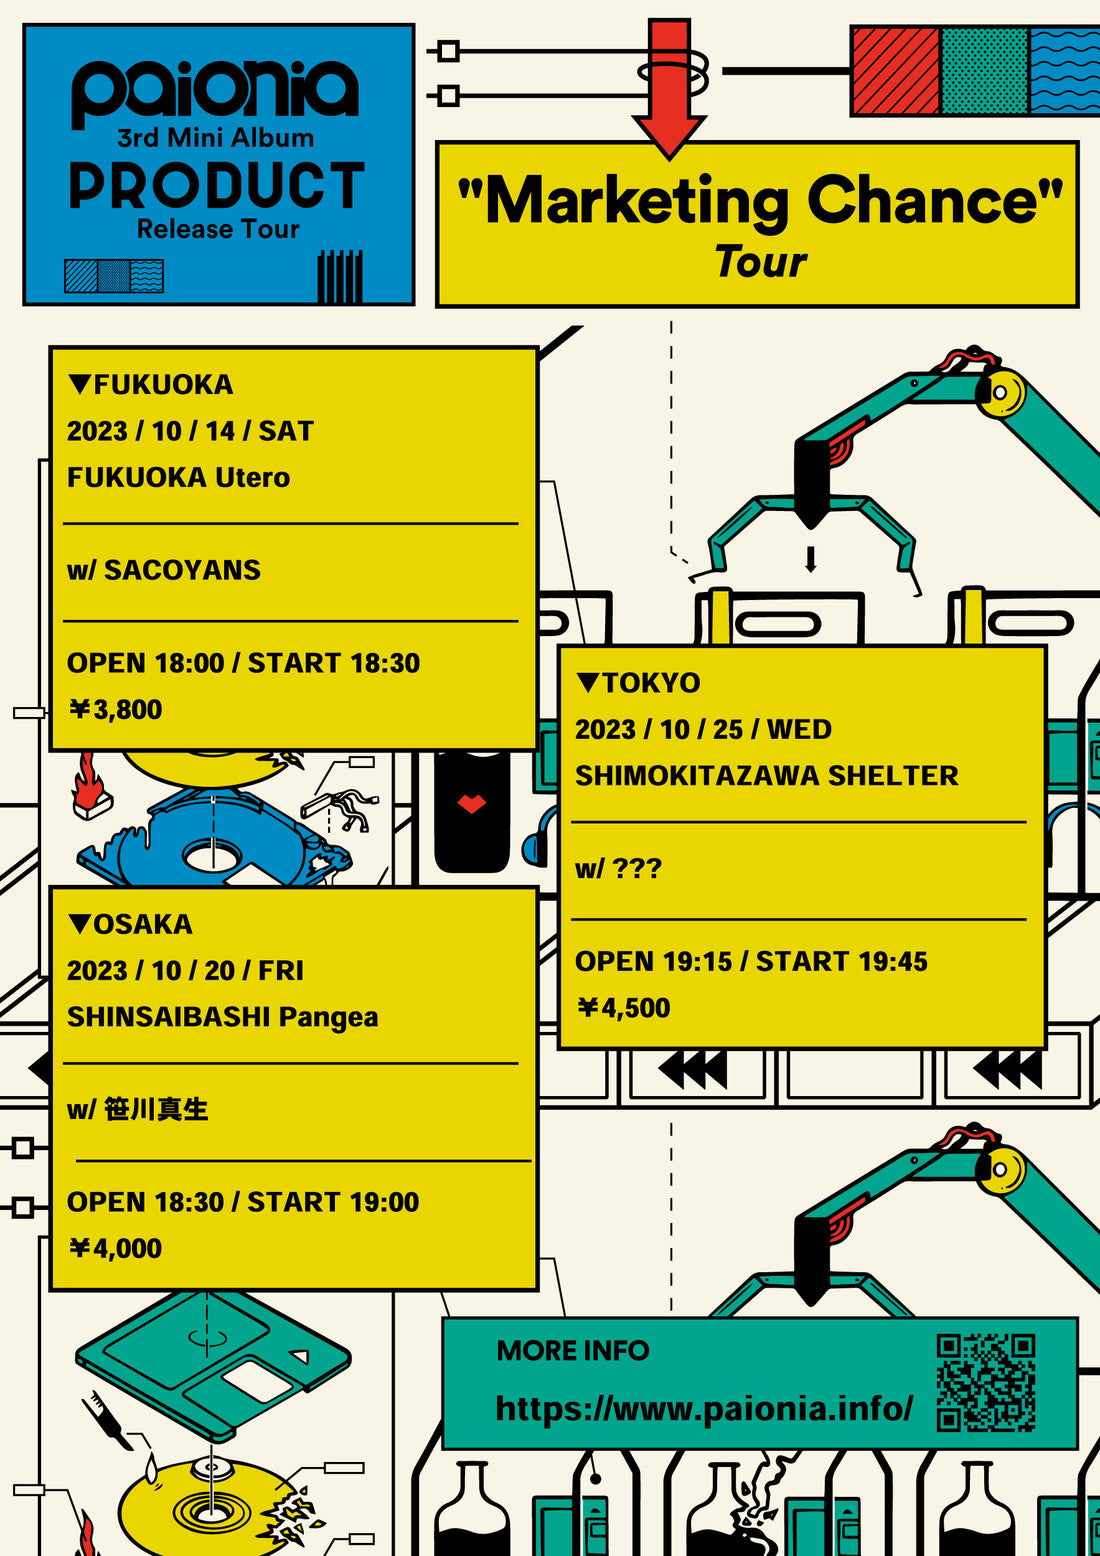 paionia 3rd Mini Album「PRODUCT」Release Tour "Marketing Chance" Tour -大阪編-